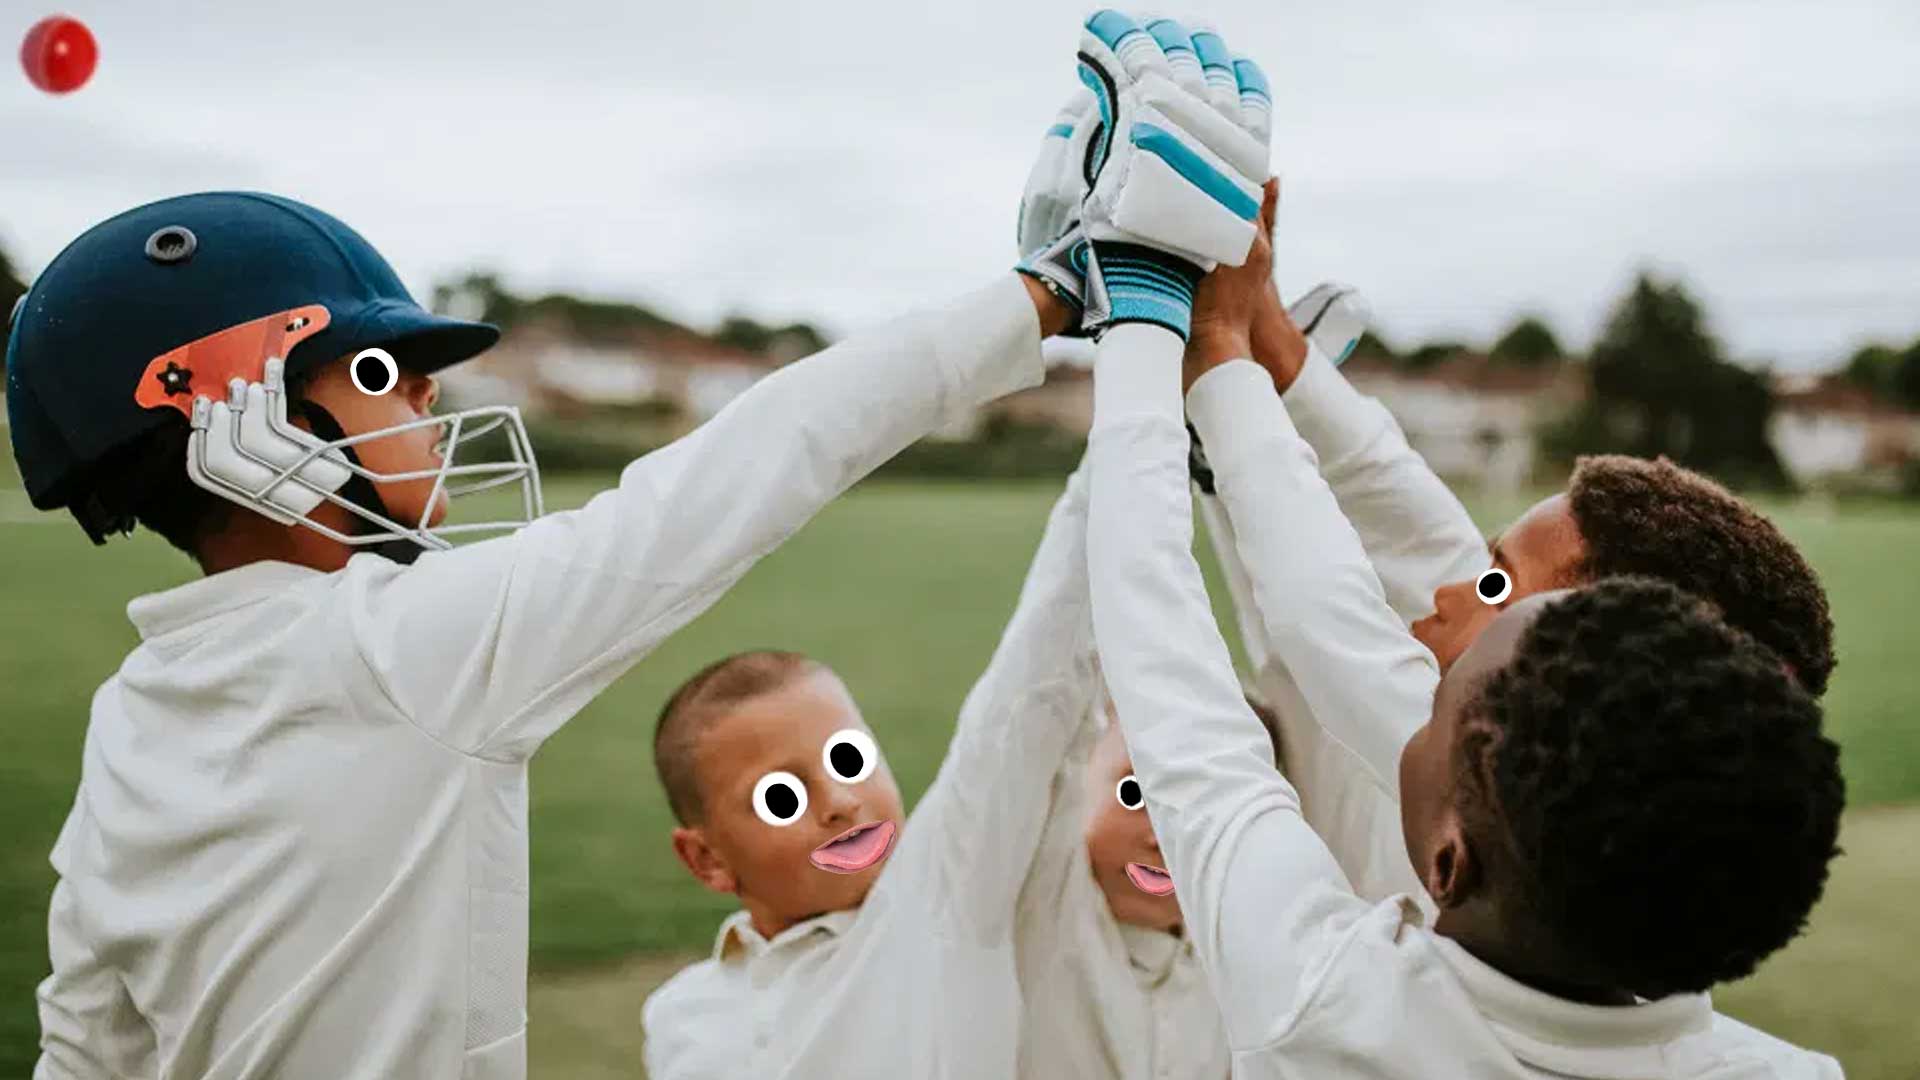 A cricket team high-fiving